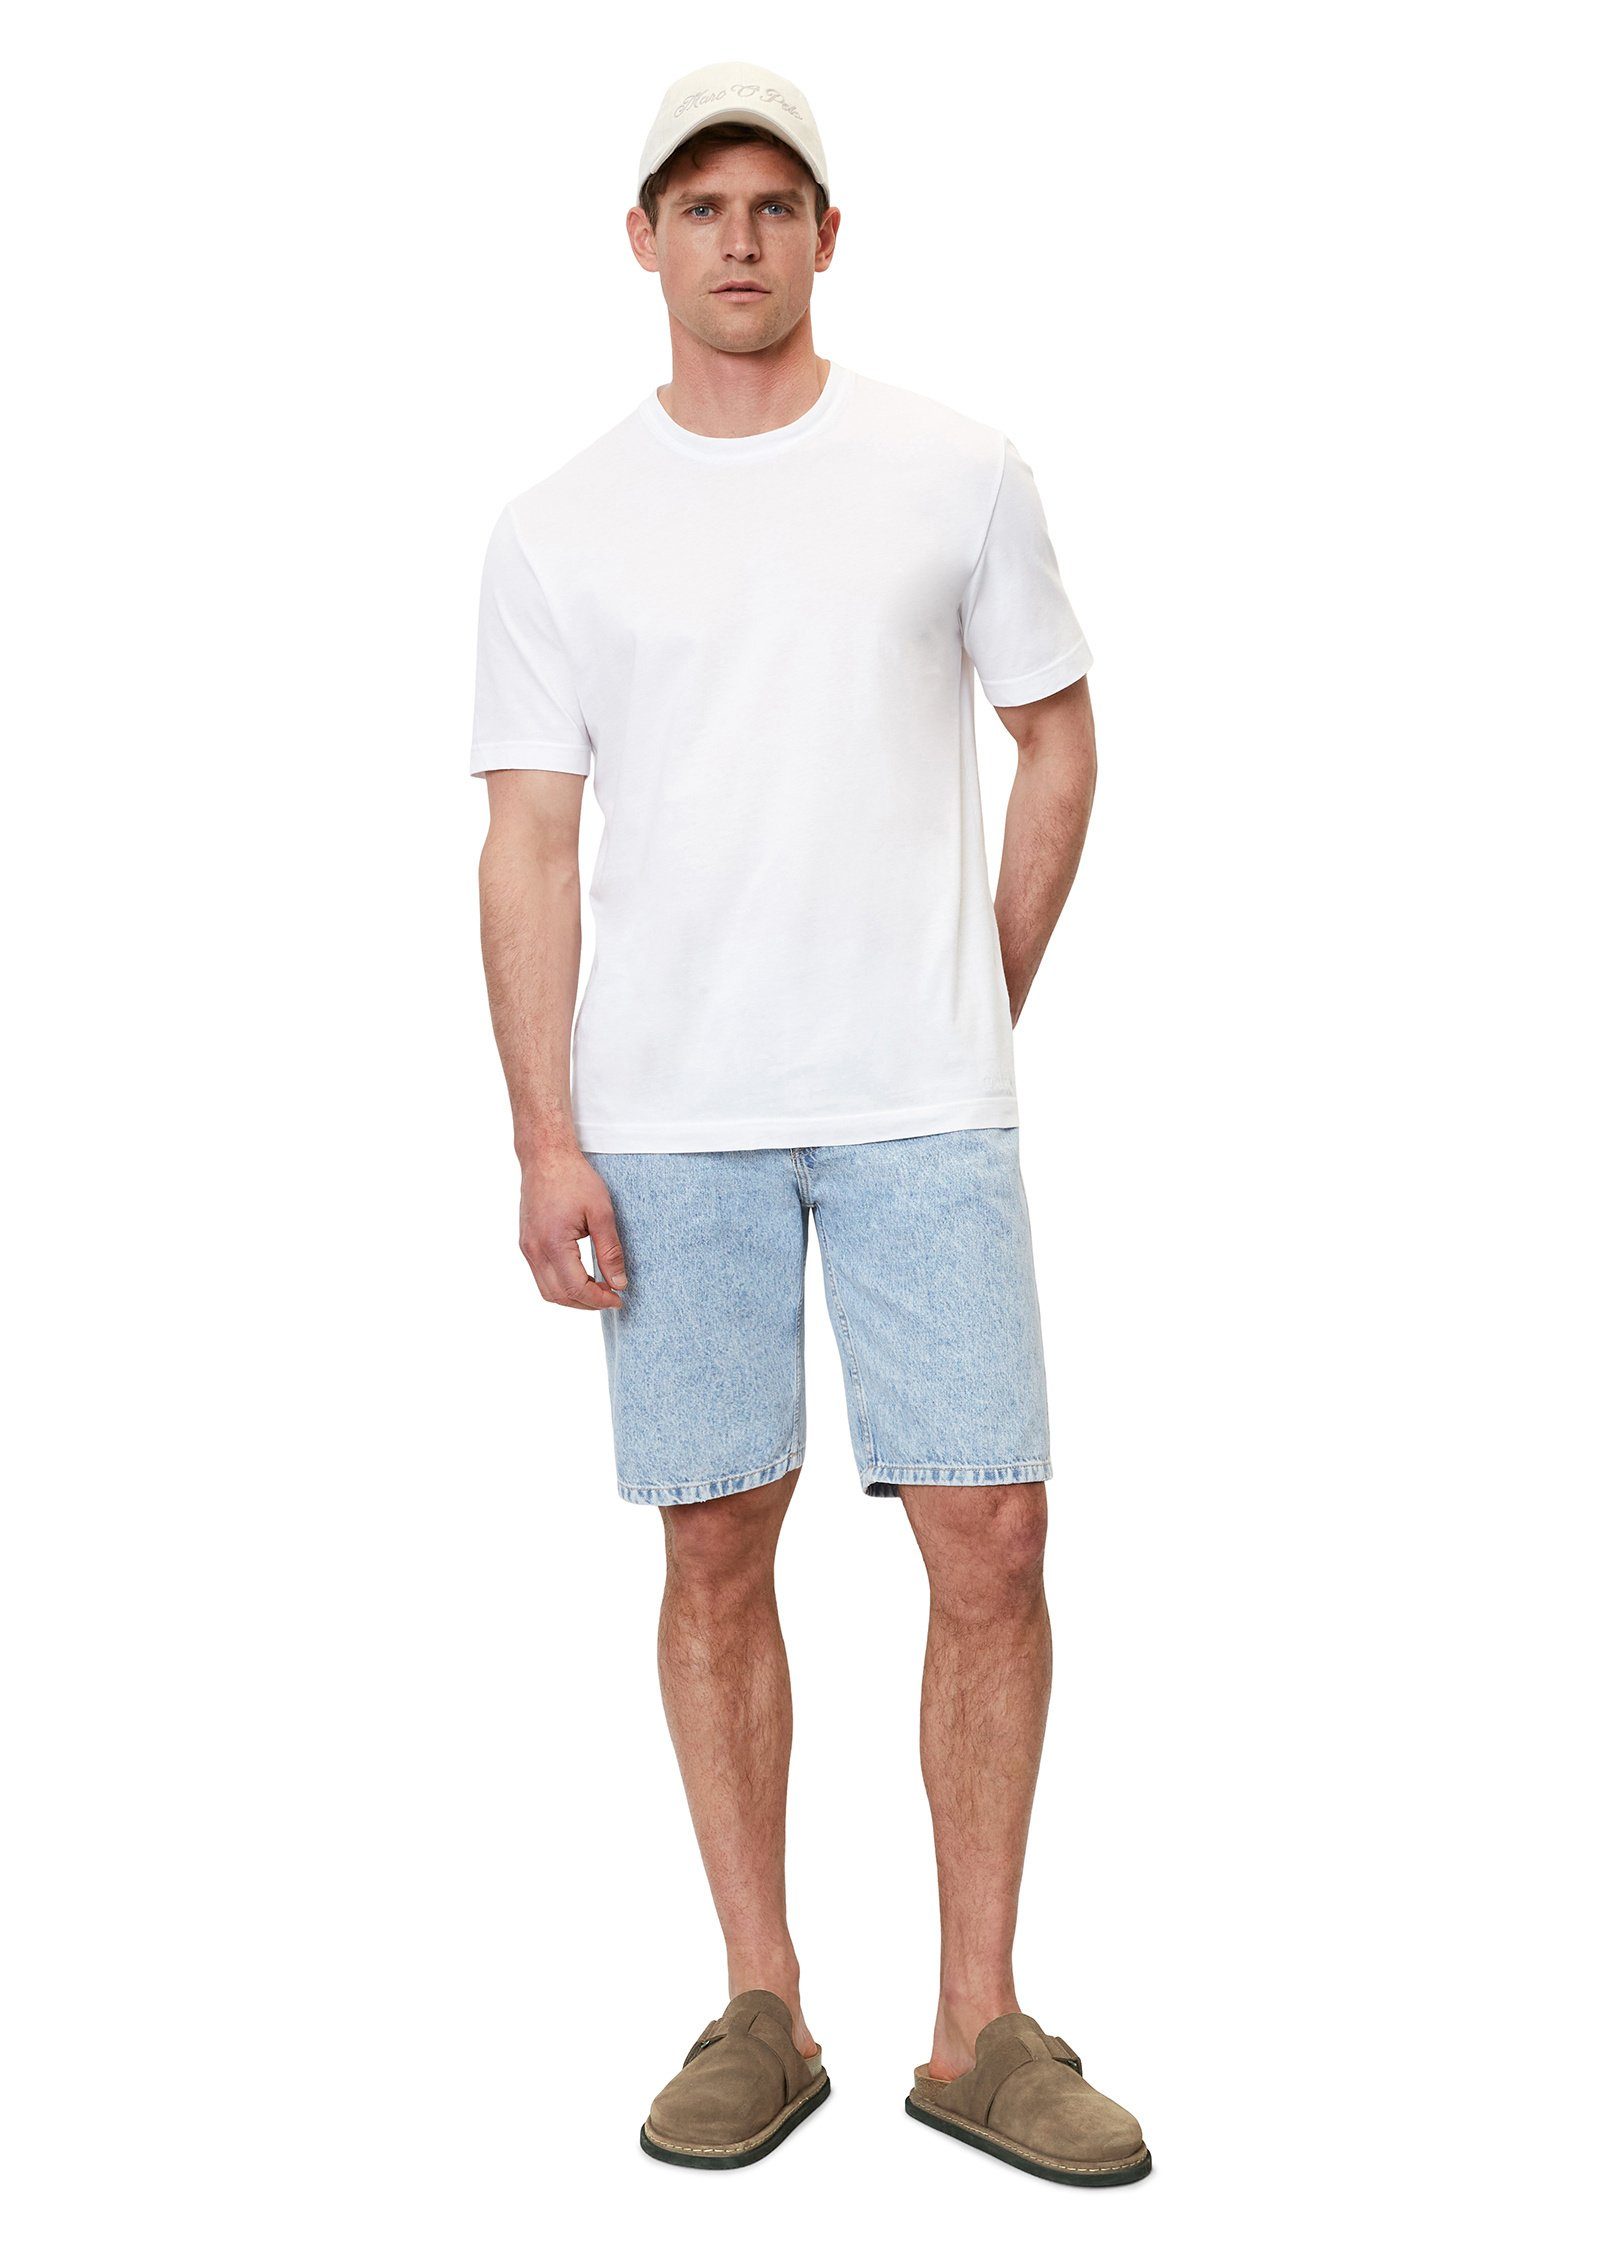 O'Polo Shorts aus hellblau reiner Bio-Baumwolle Marc